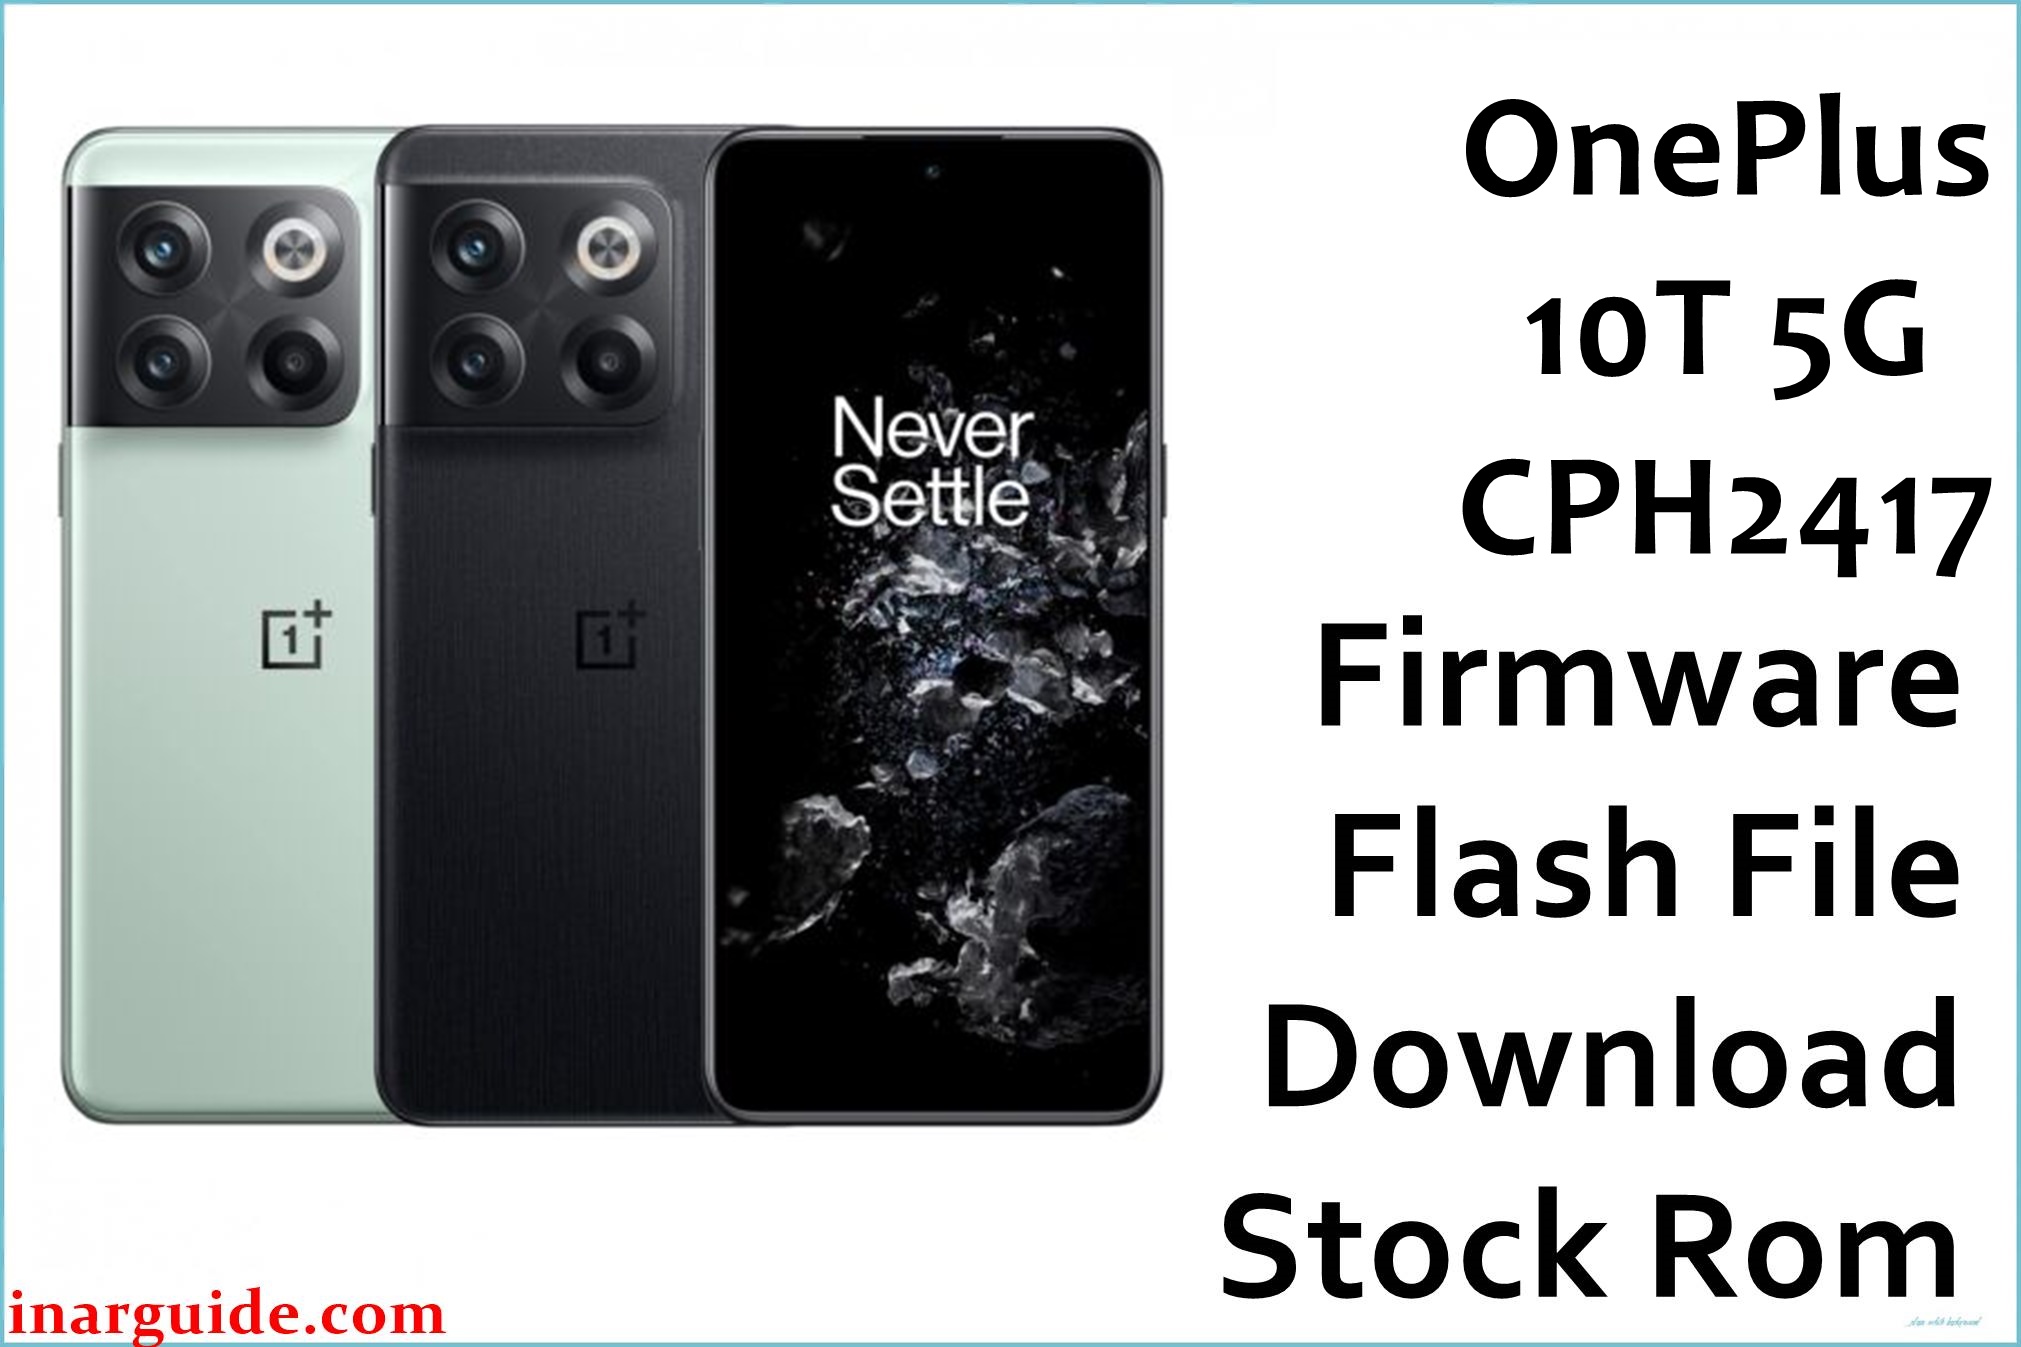 OnePlus 10T 5G CPH2417